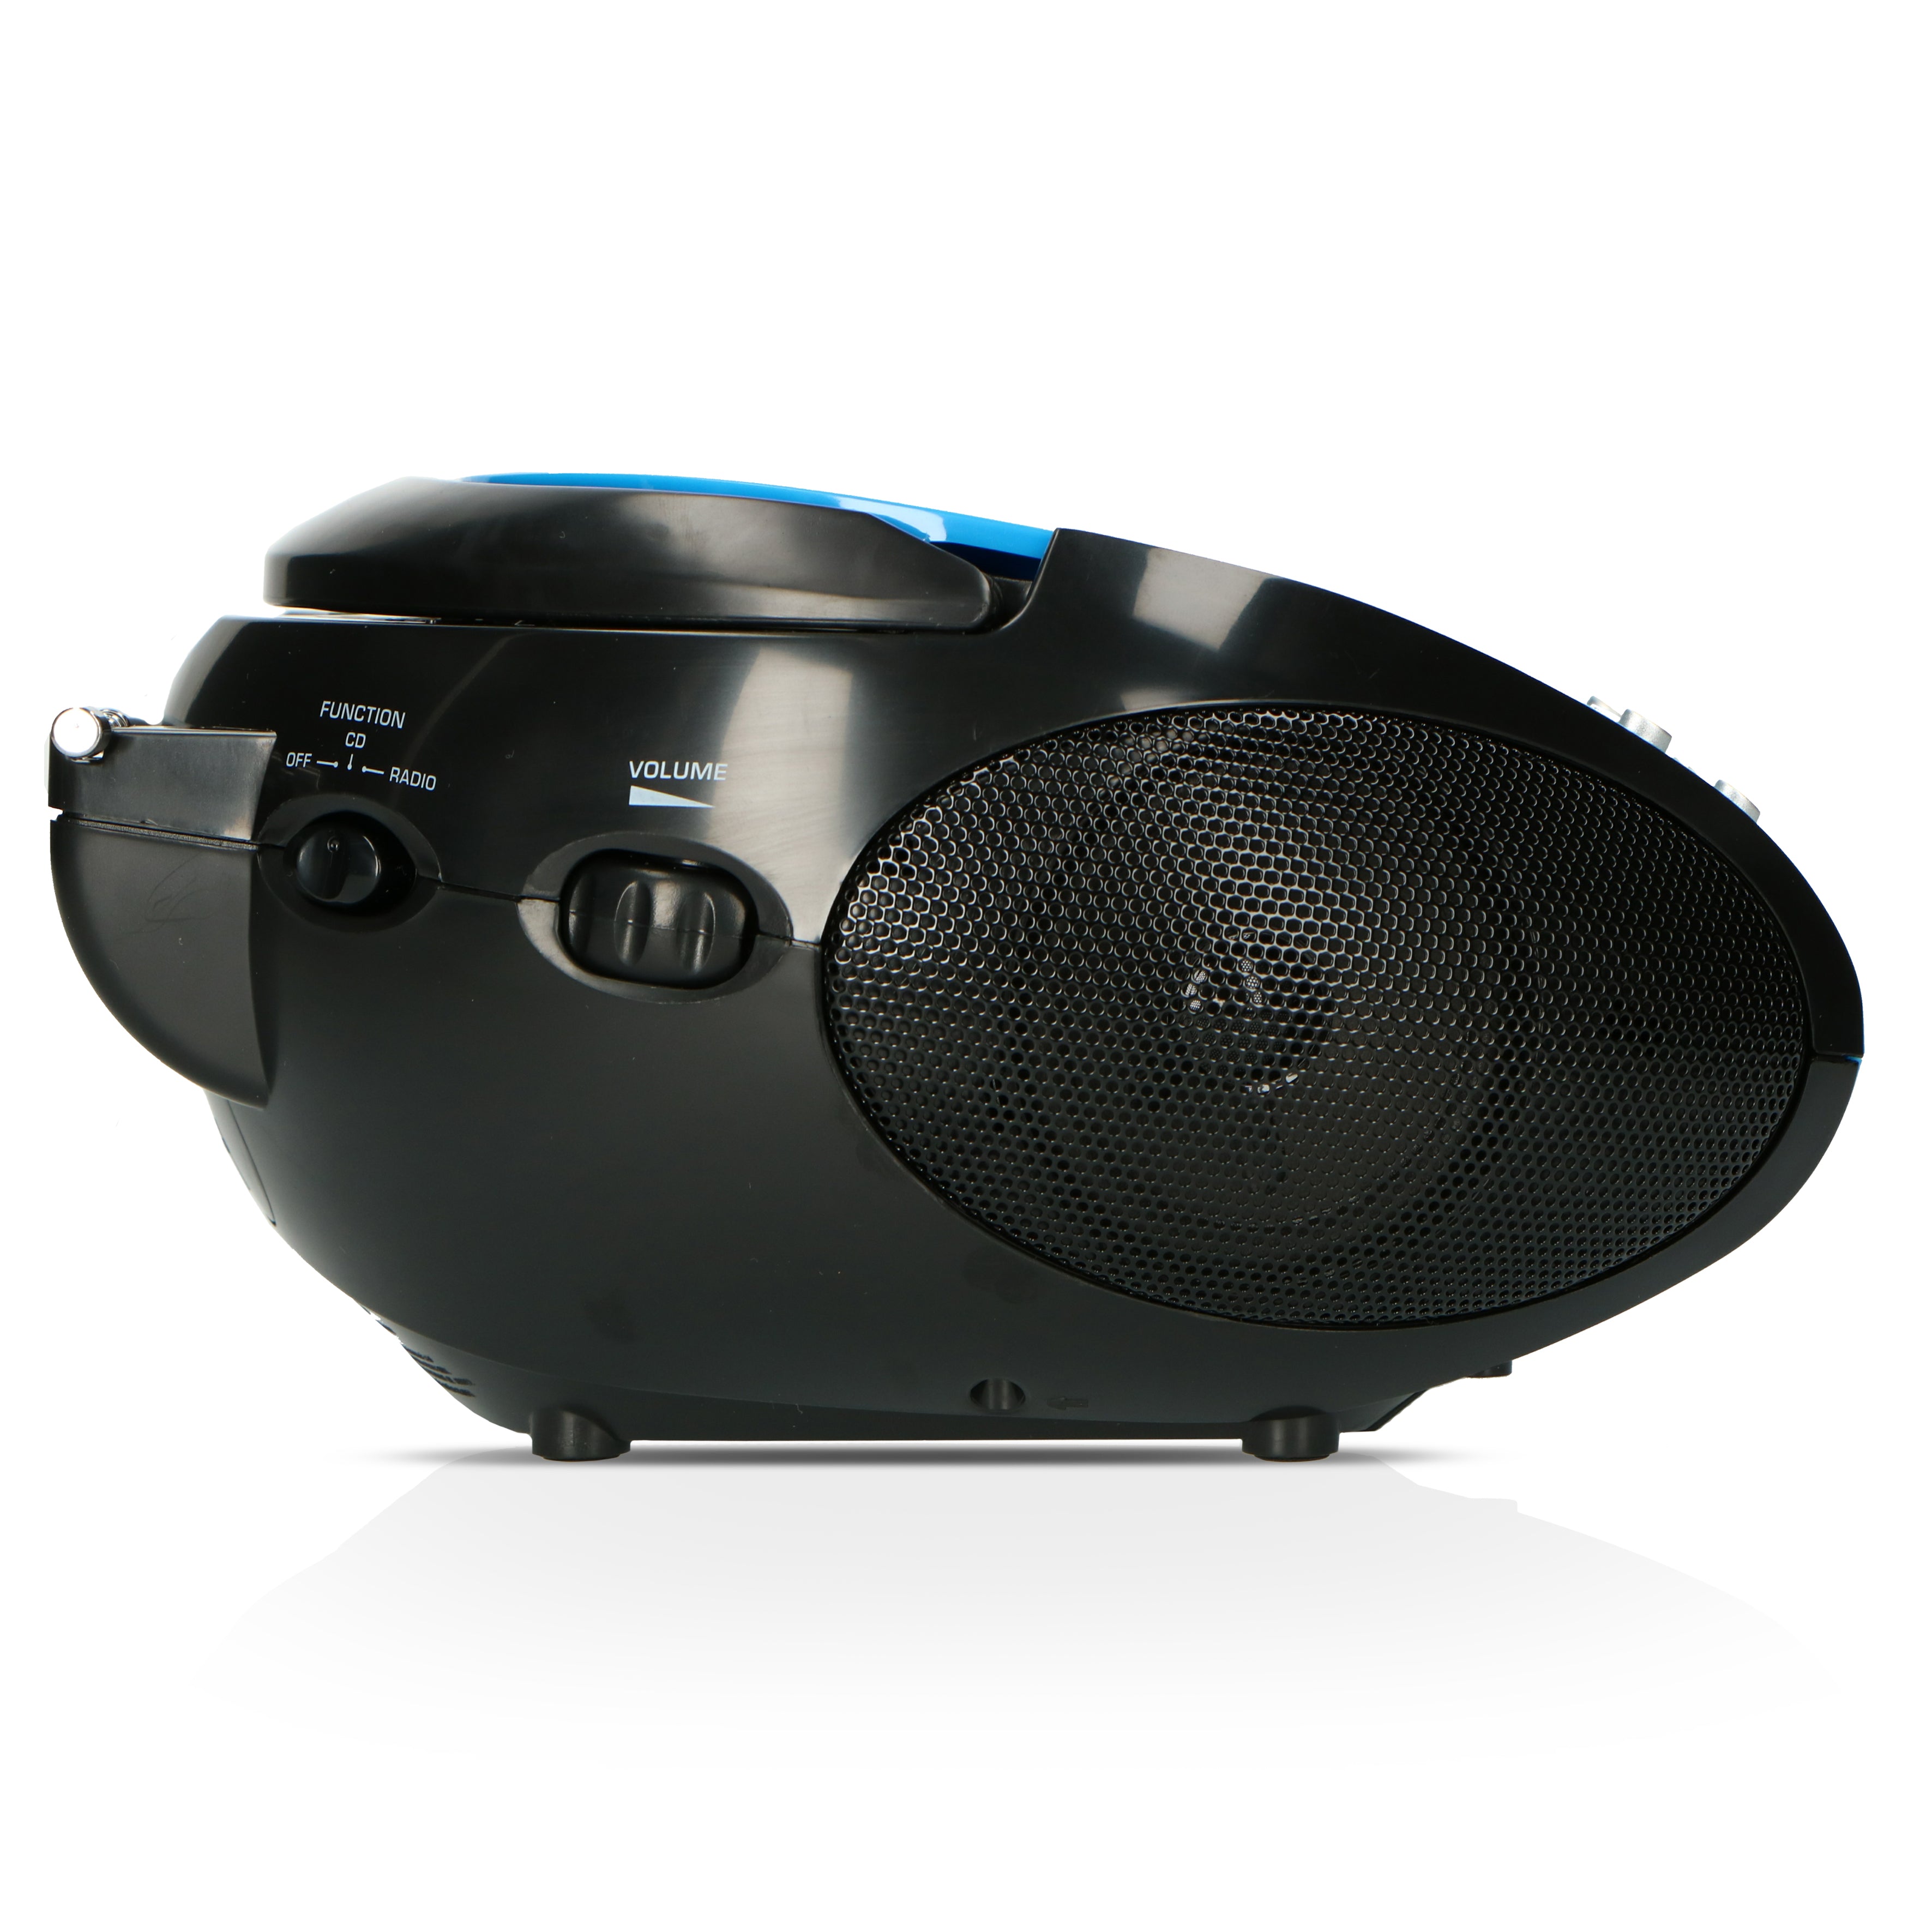 LENCO SCD-24 Blue/Black UK - Portable stereo FM radio with CD player - Blue/black